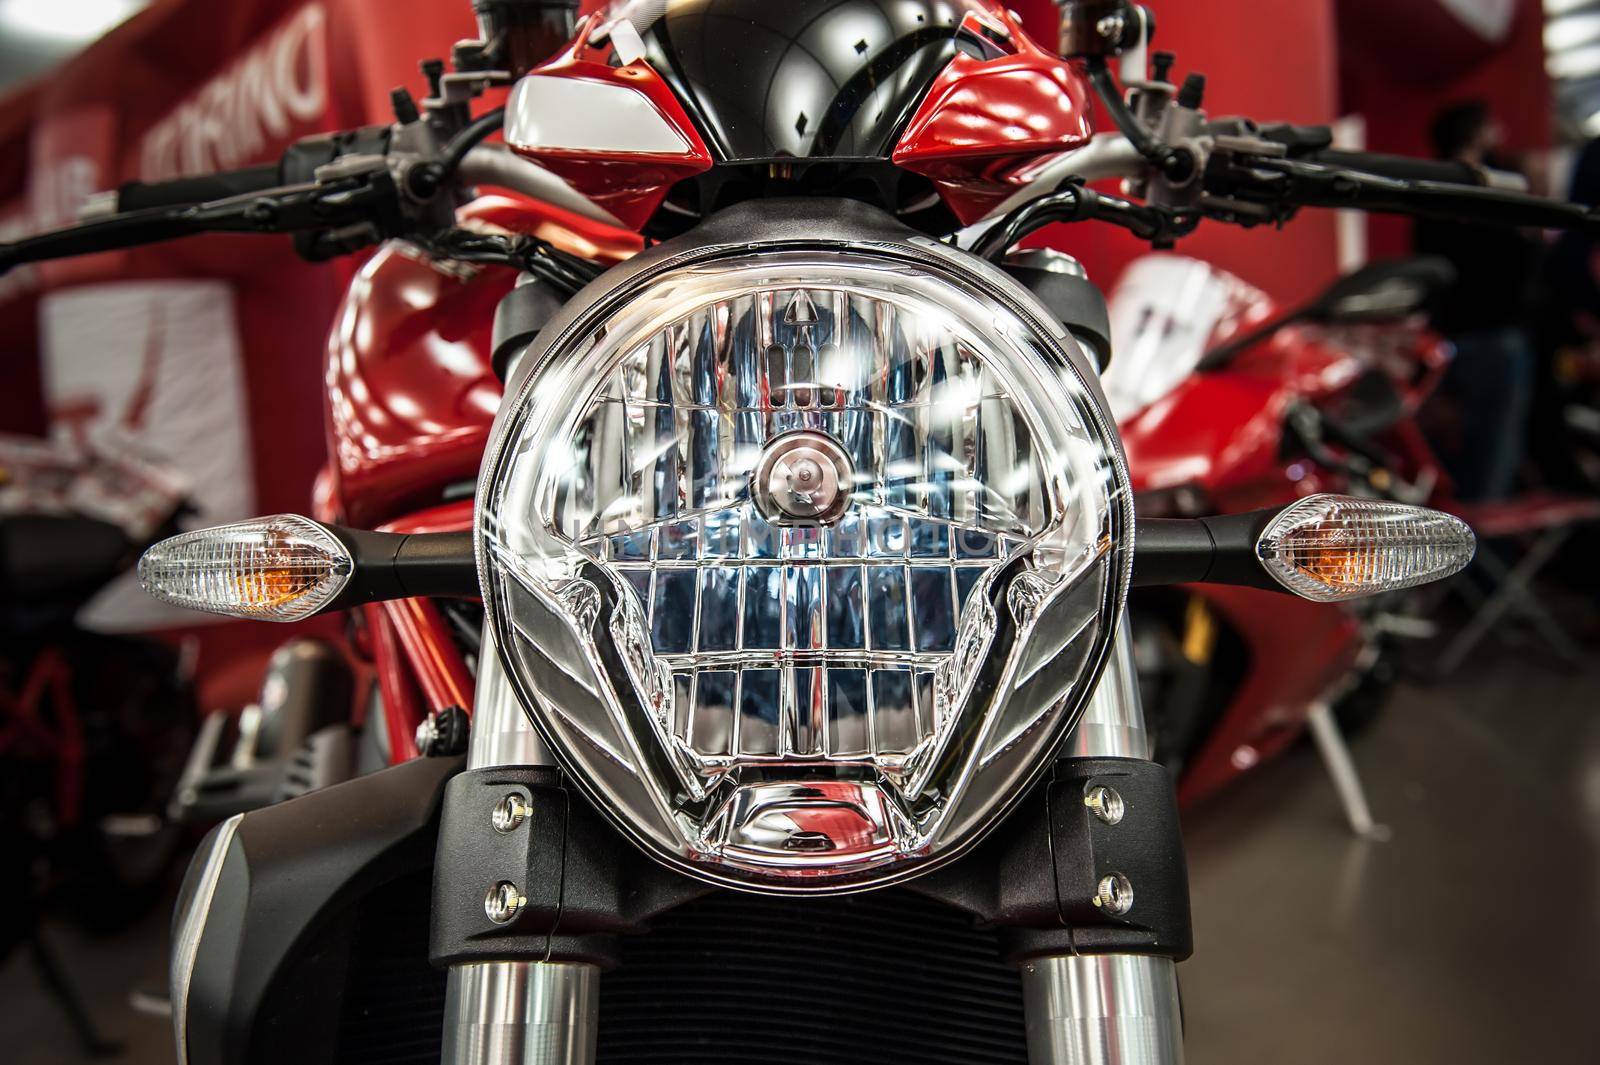 Headlight of a modern motorcycle in a salon